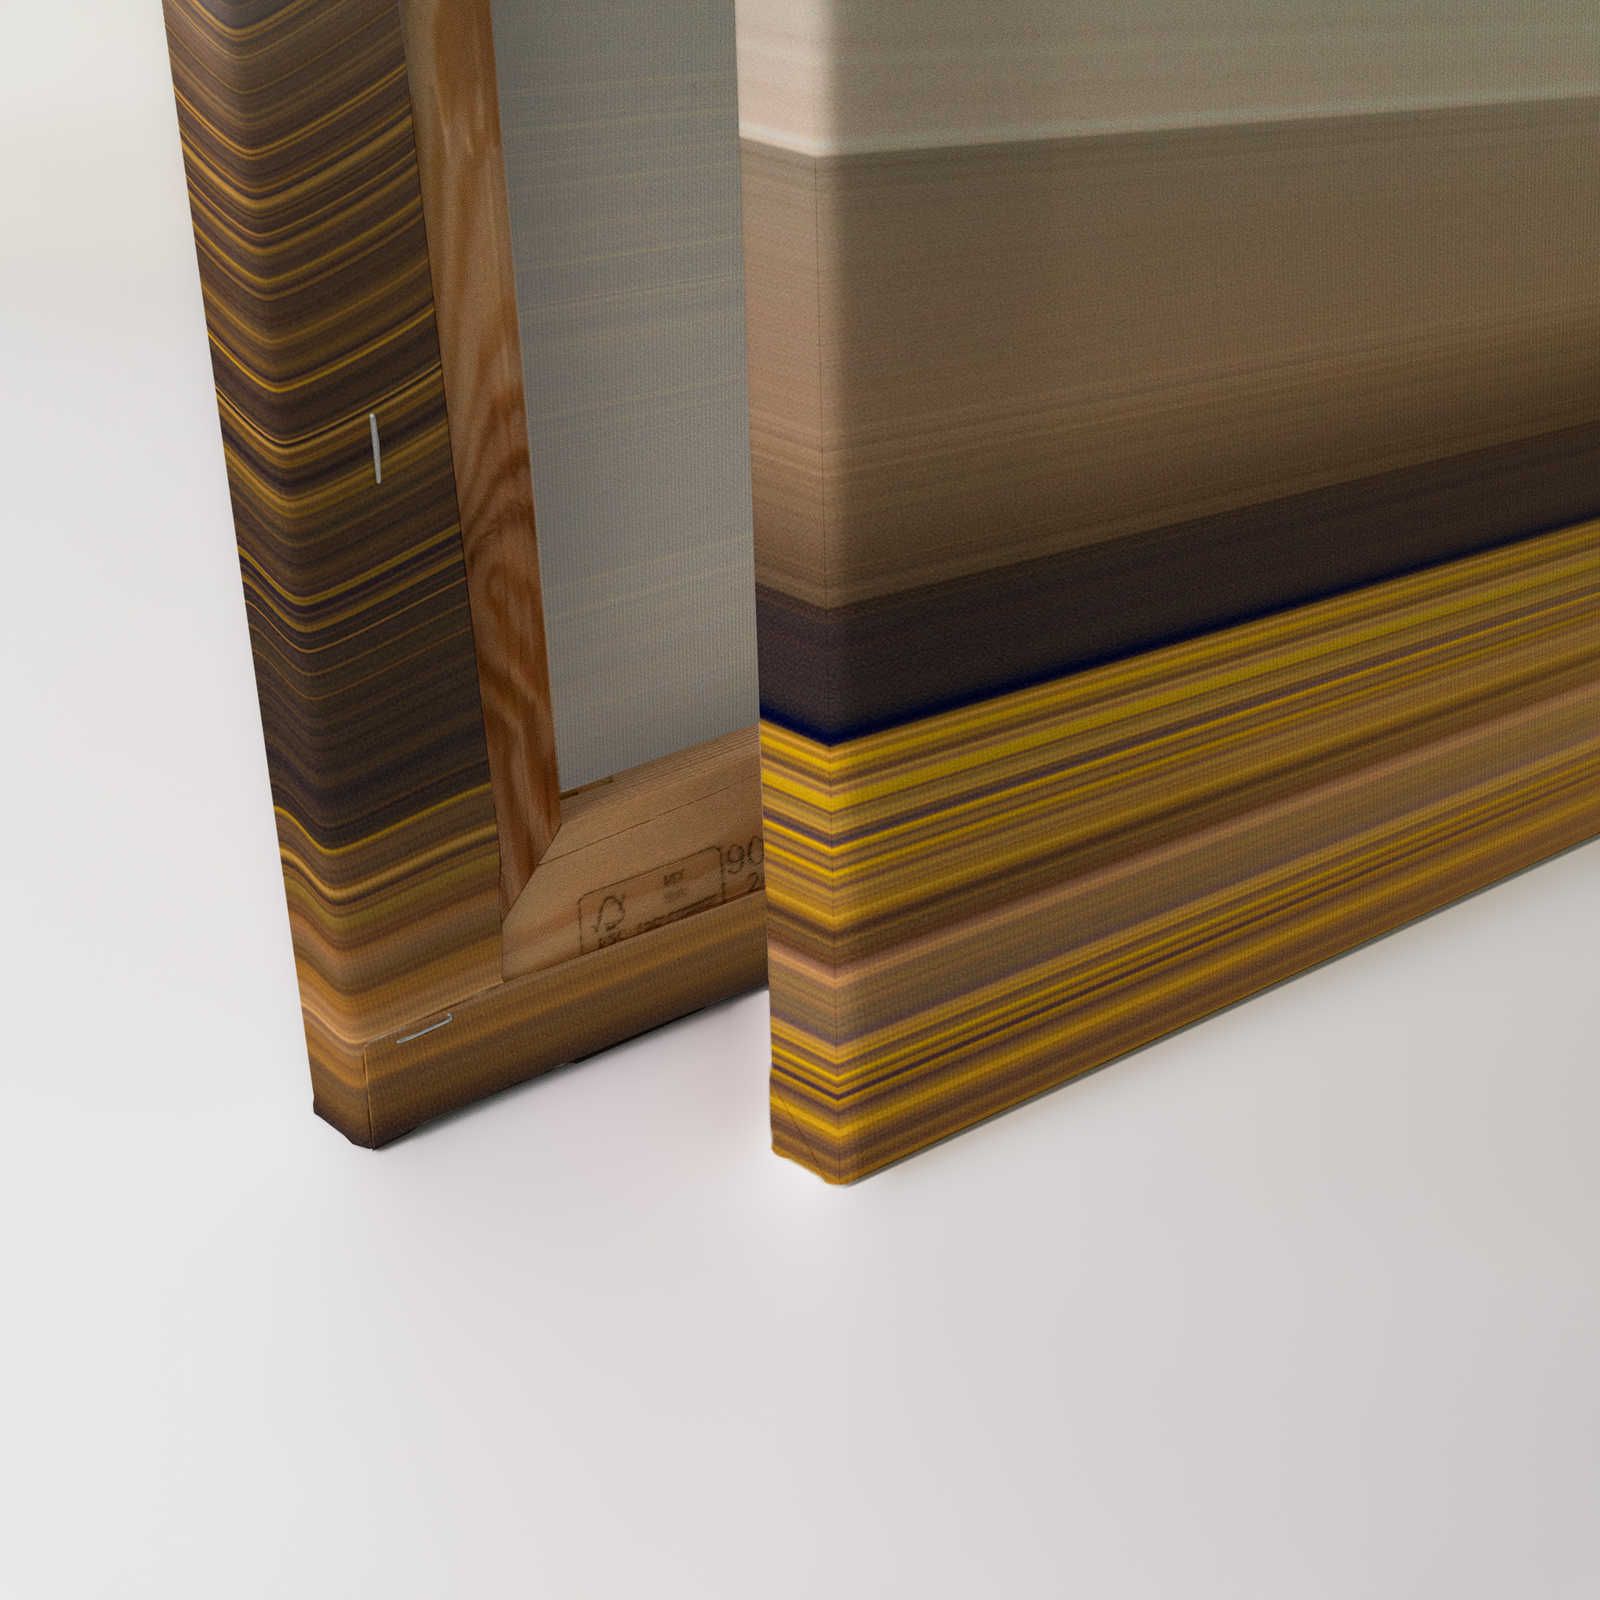             Horizon 3 - Lienzo Paisaje abstracto con diseño de colores - 0,90 m x 0,60 m
        